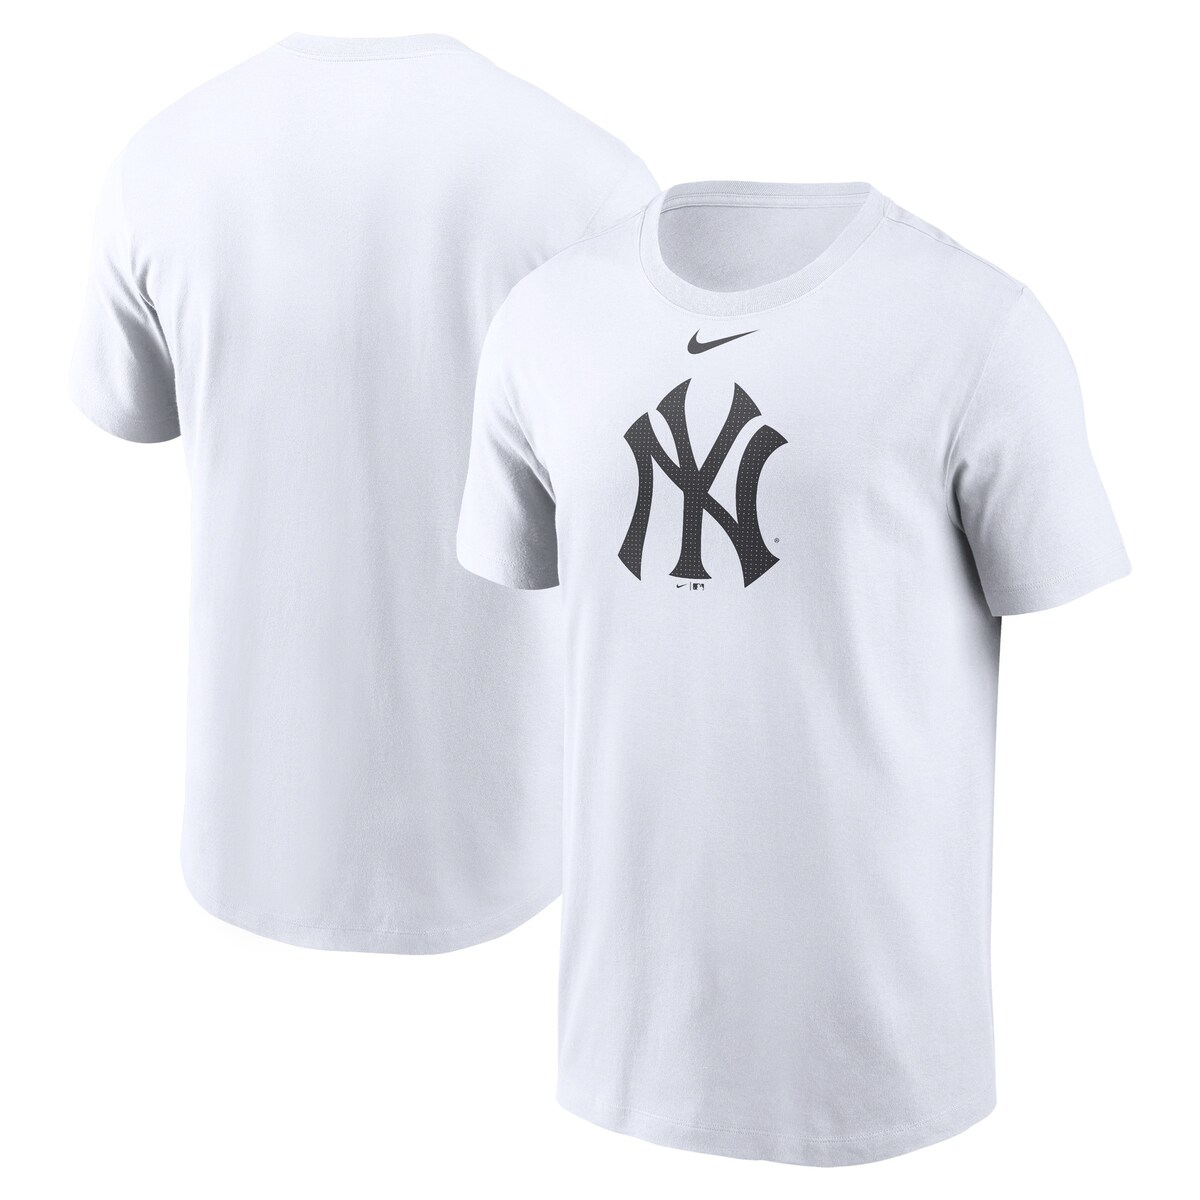 MLB ヤンキース Tシャツ Nike ナイキ メンズ ホワイト (Men's Nike Fuse Large Logo Cotton Tee SP24)